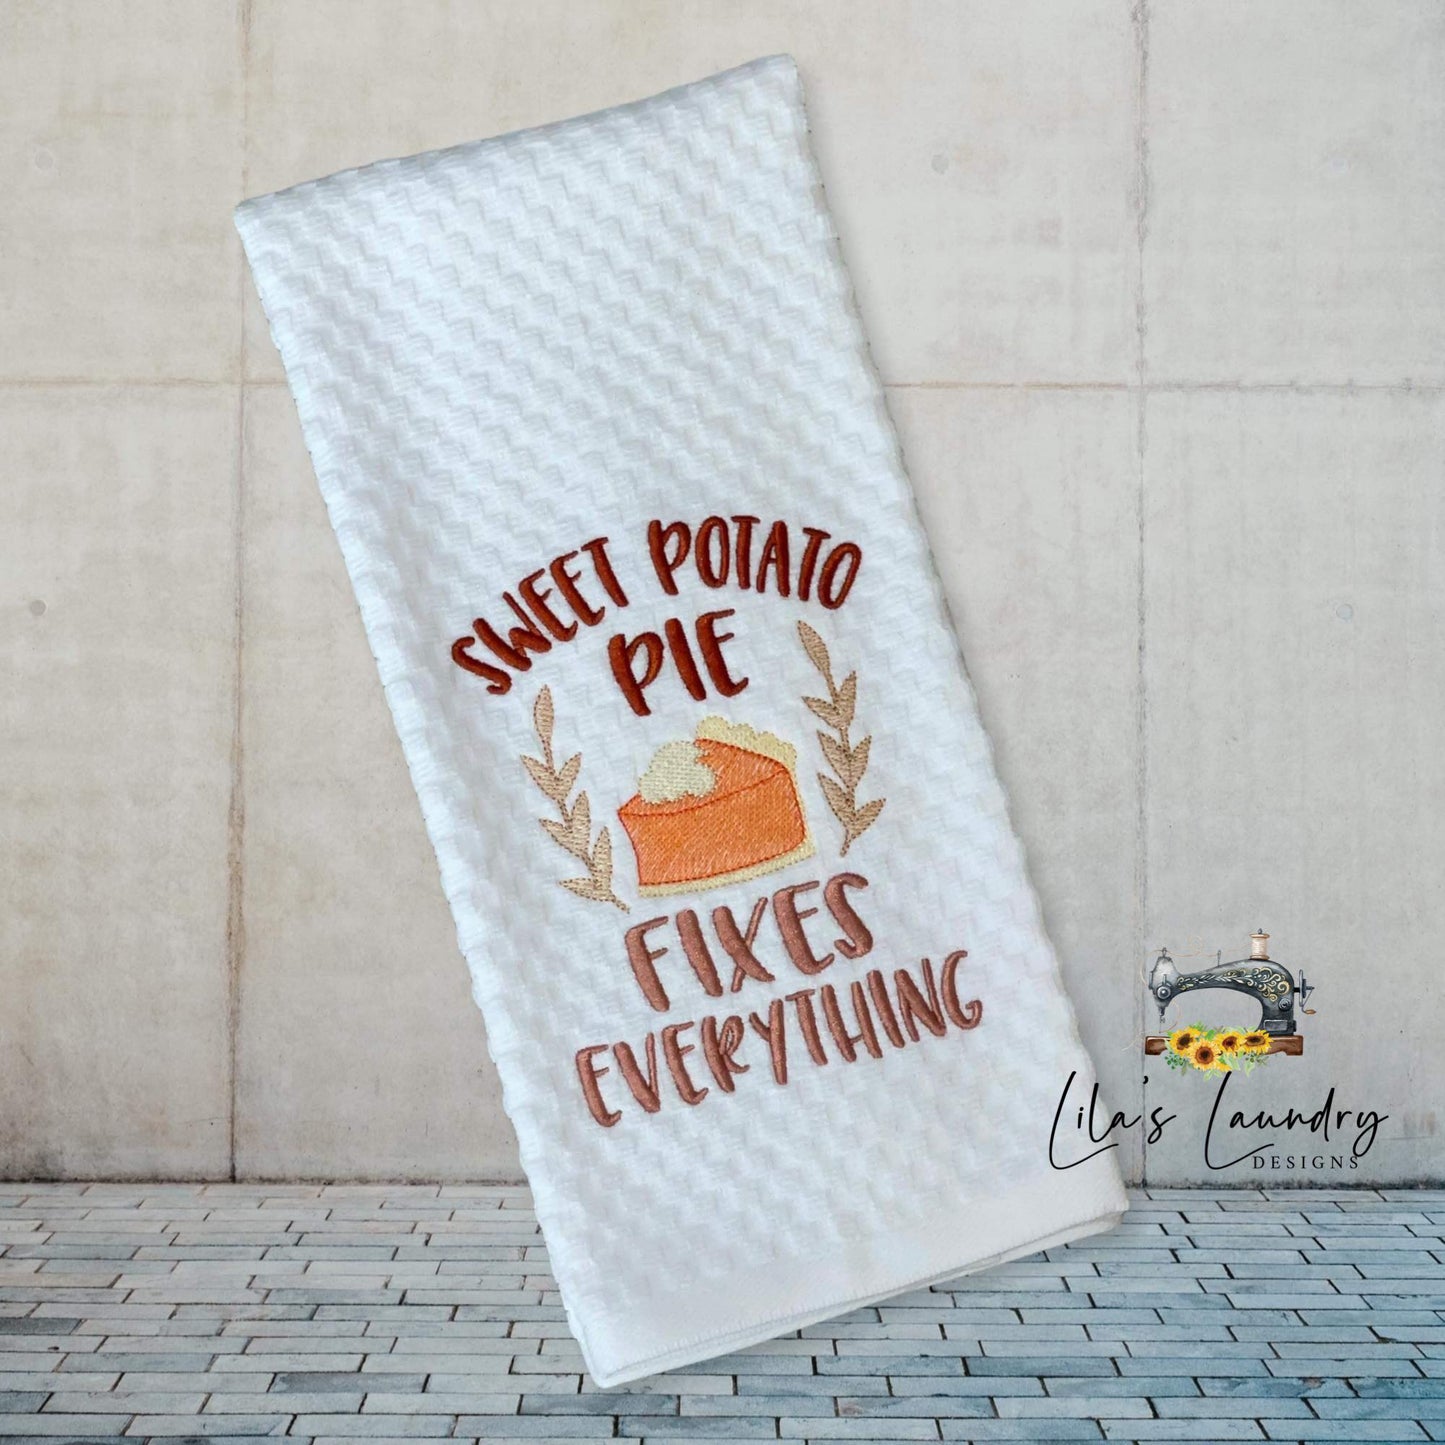 Sweet Potato Pie - 3 sizes- Digital Embroidery Design